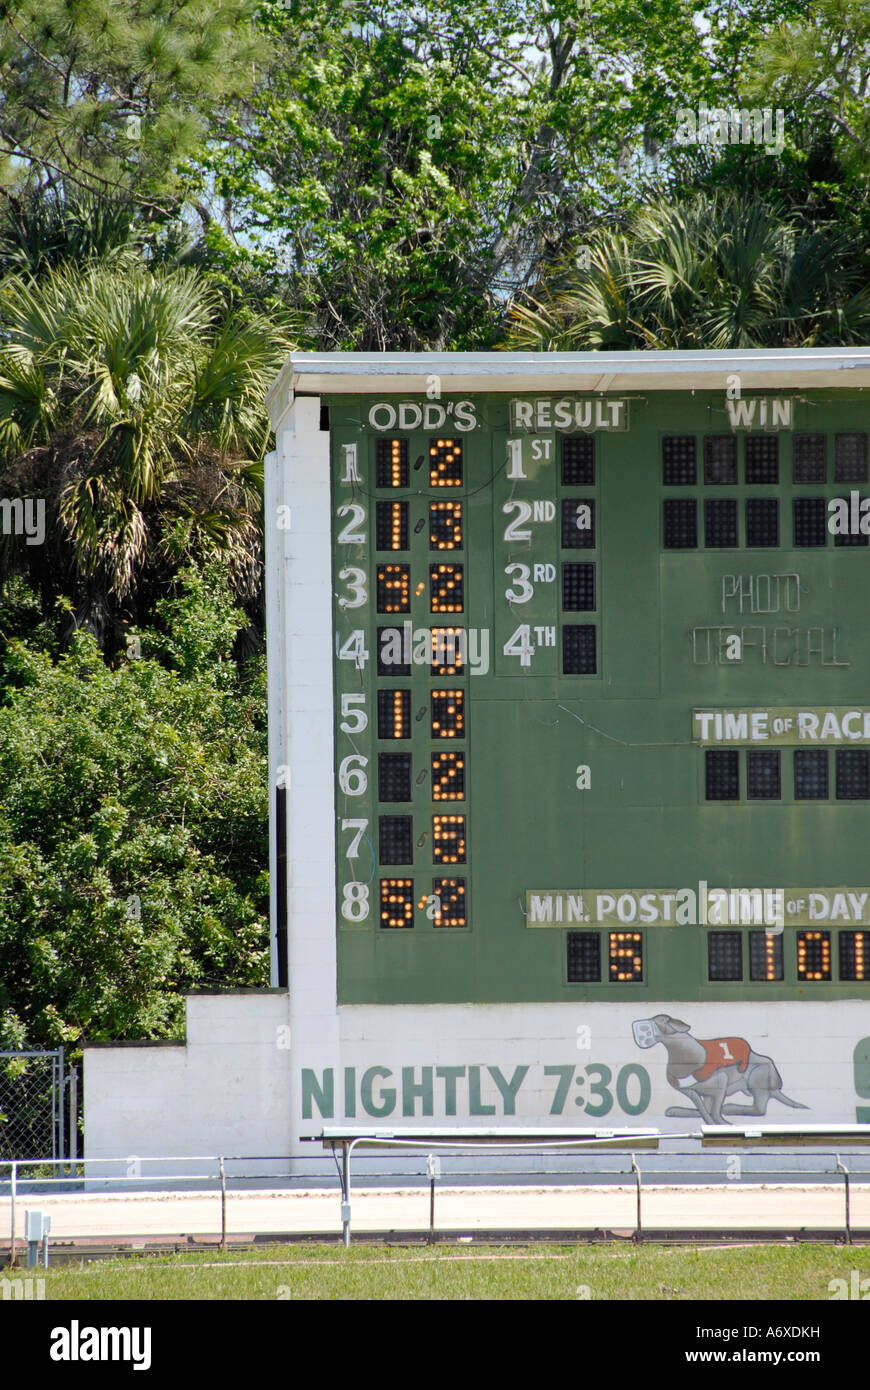 Cane Greyhound Racing a Sarasota Florida FL Kennel Club Foto Stock